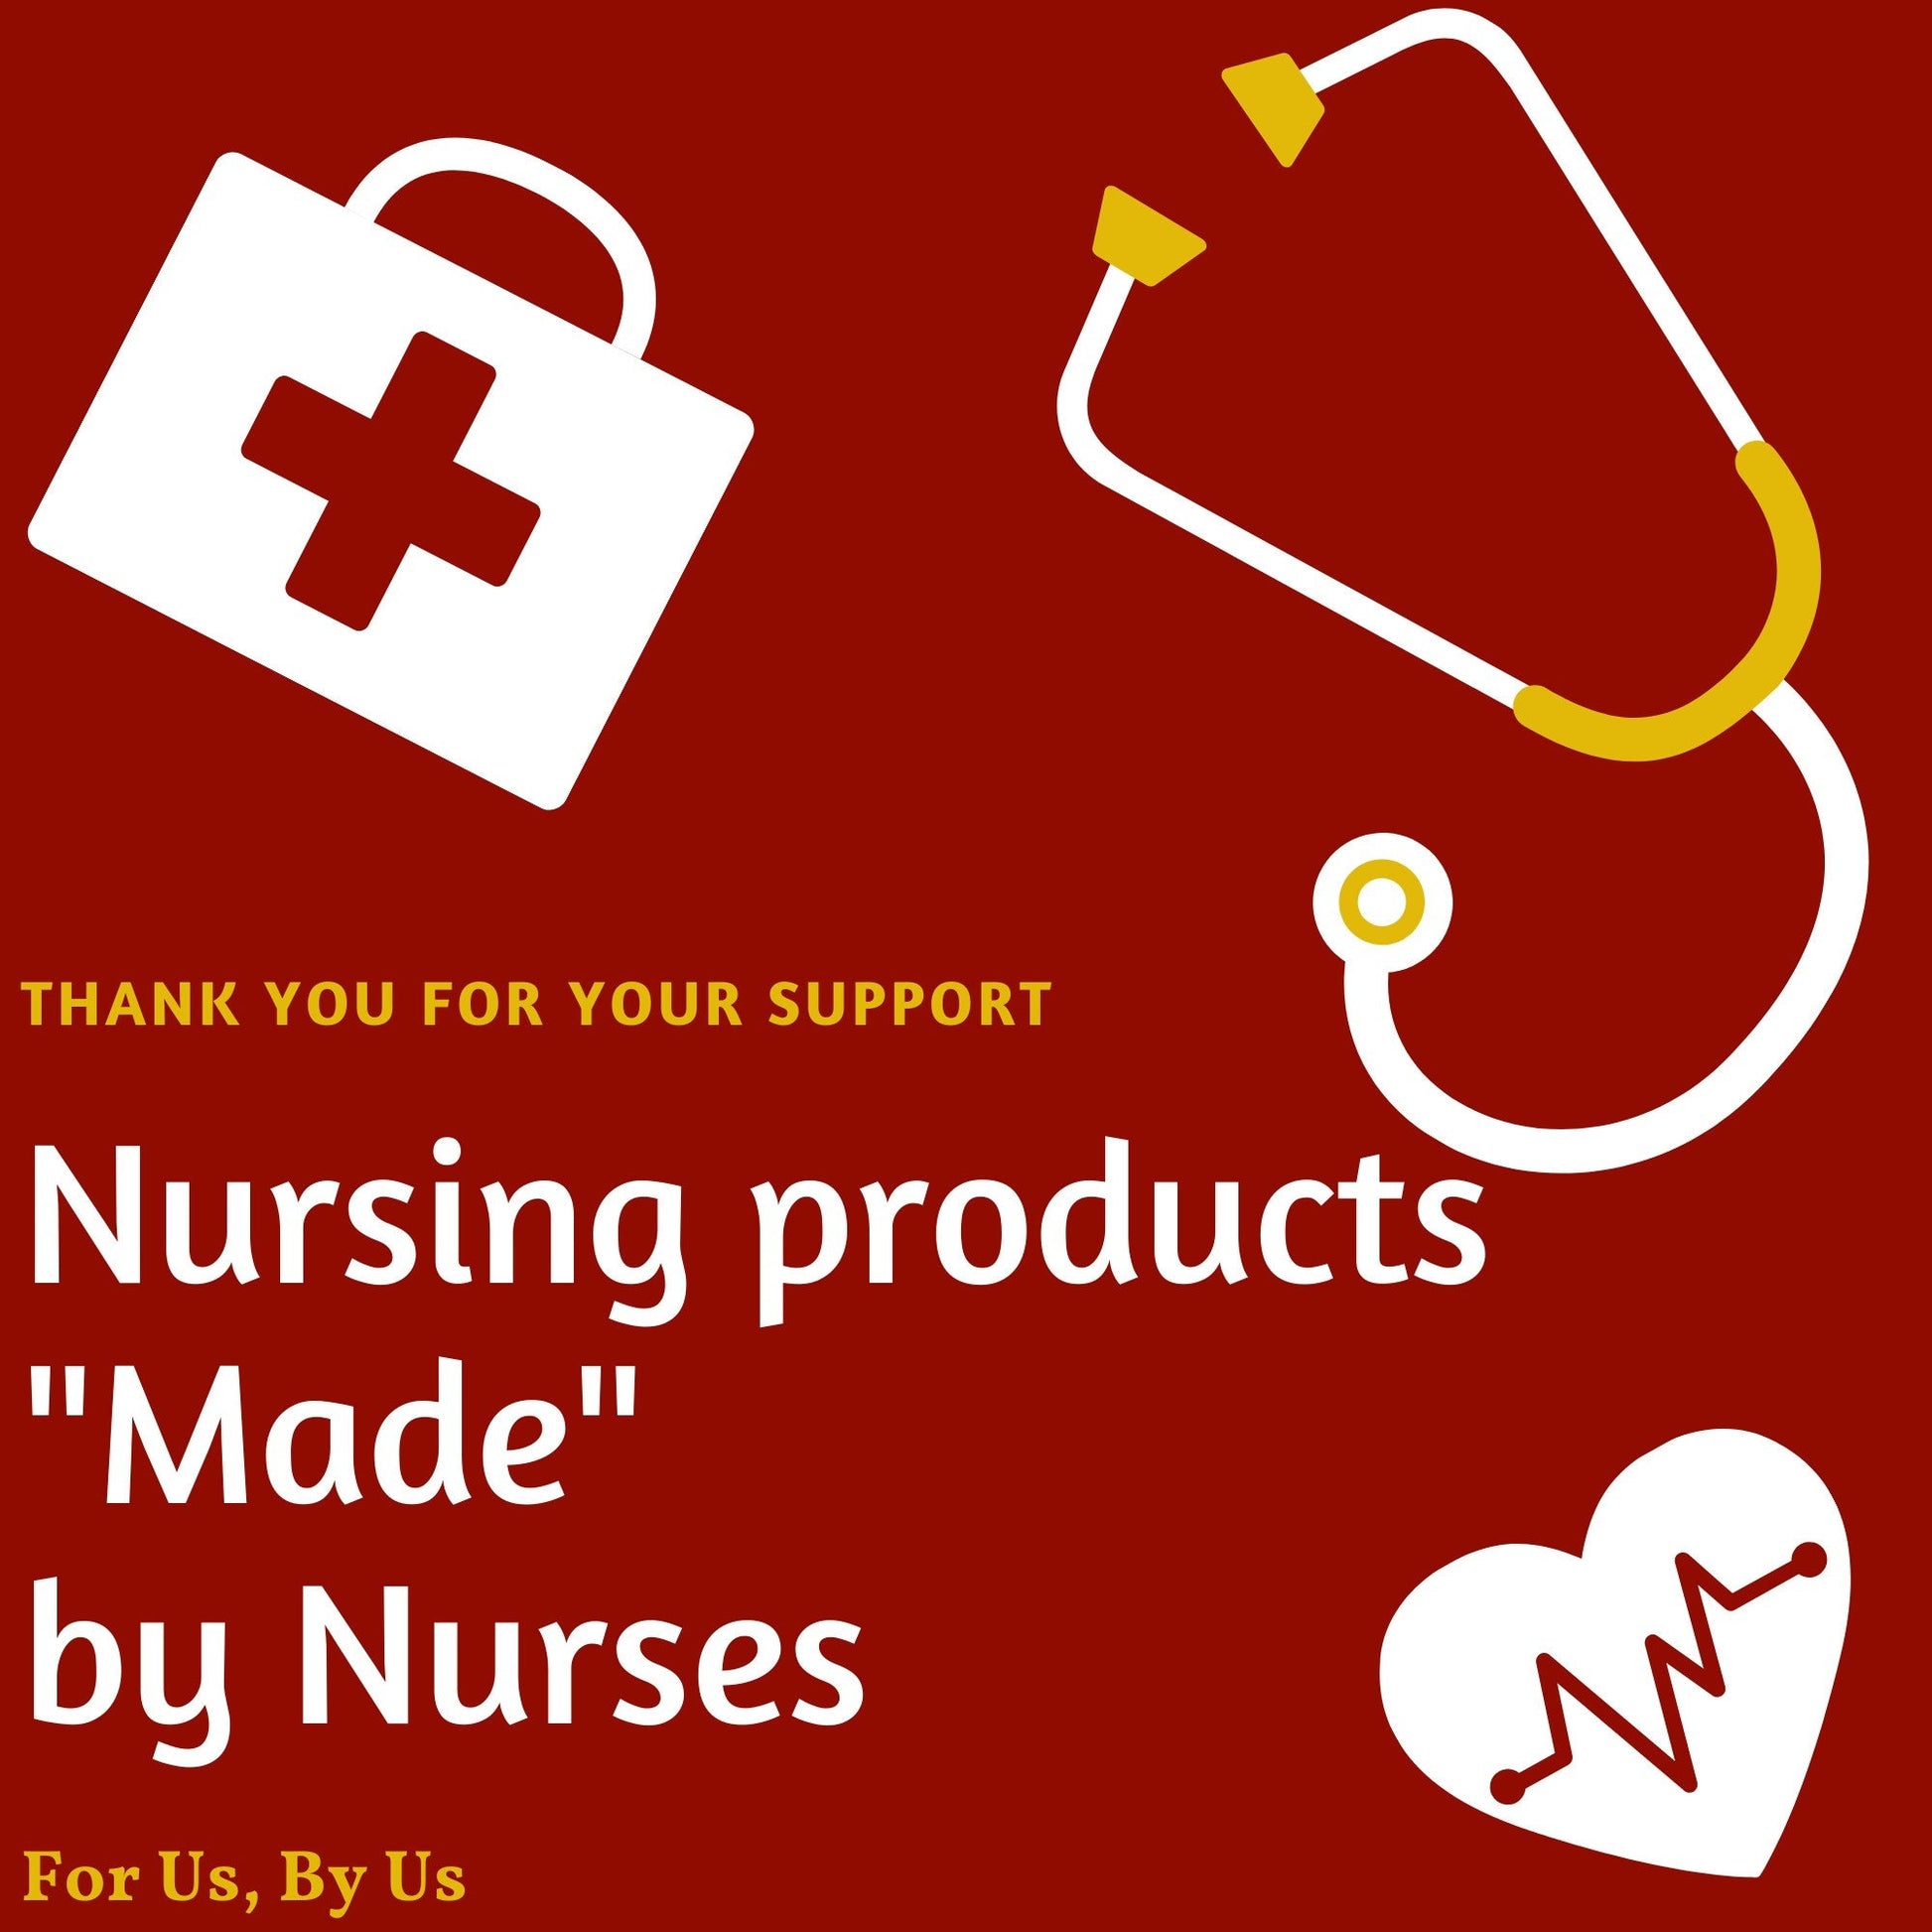 Nurse Practitioner Badge Reel Nurse Practitioner Badge Holder Nurse  Practitioner Gift Nurses Week NP Badge Reel NP Badge Holder -  Canada